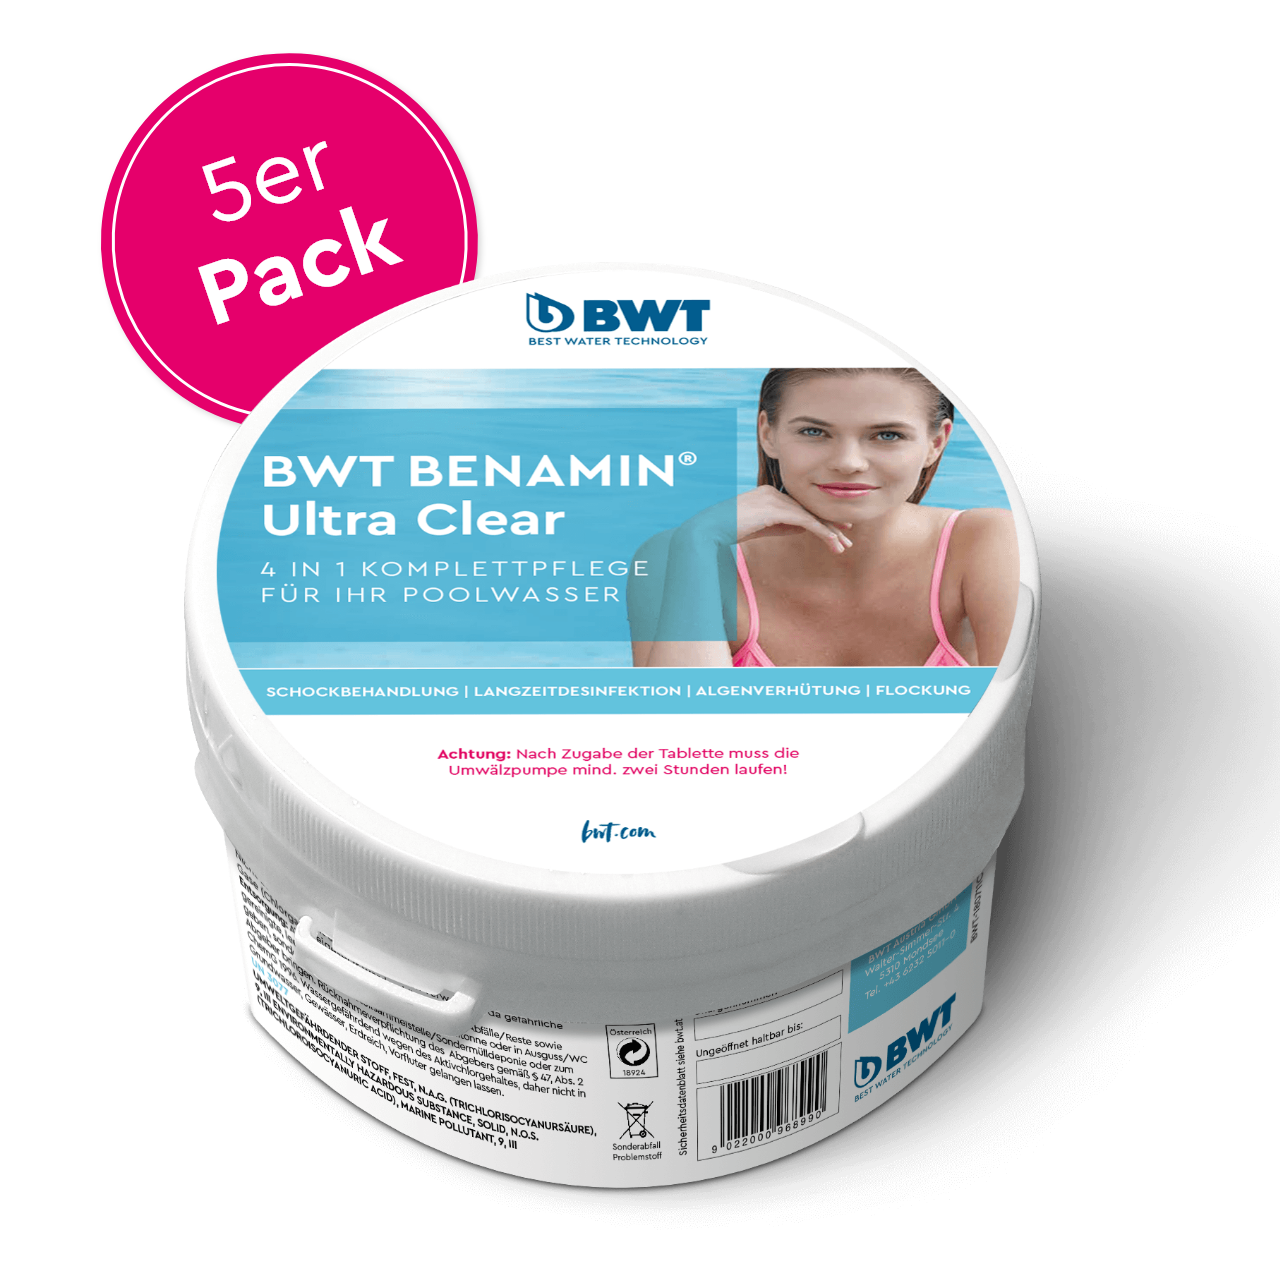 Benamin Ultra Clear - 5er Pack zur Poolwasserpflege